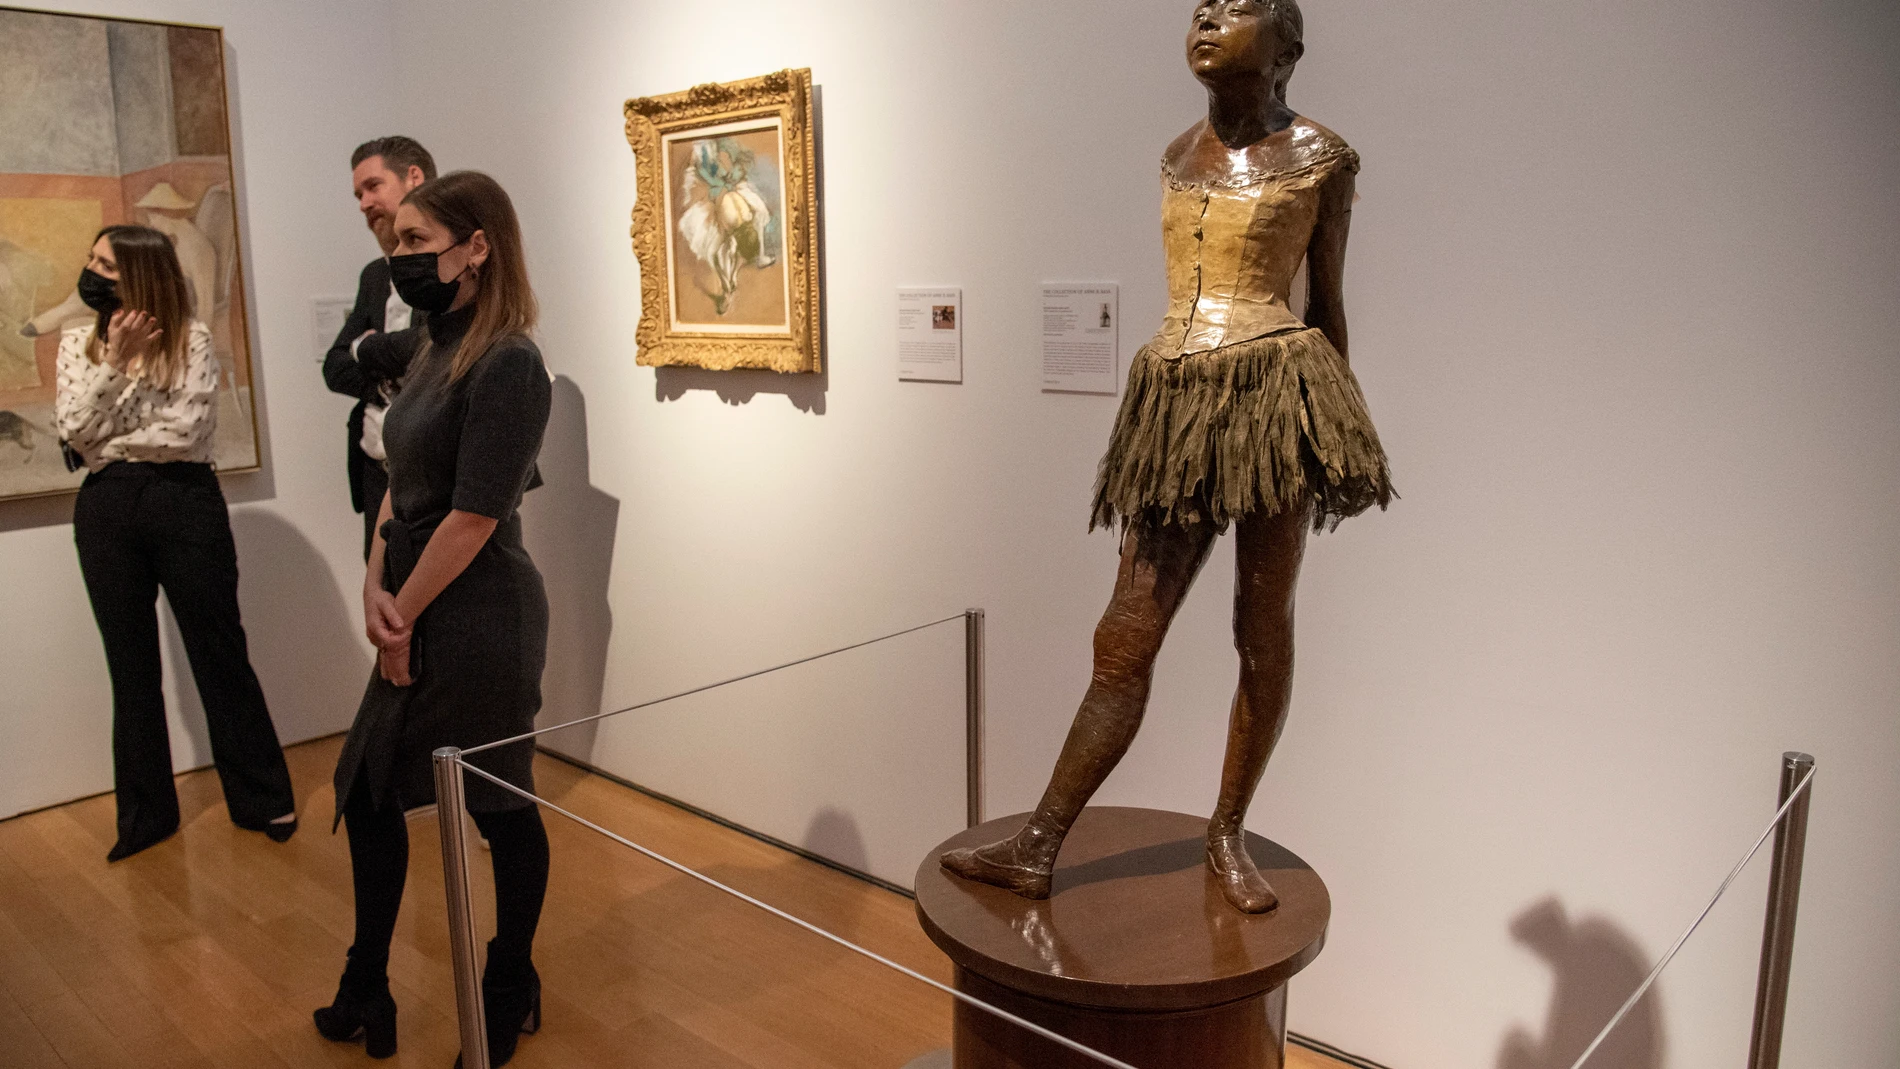 La escultura "Petite danseuse de quatorze ans" de Edgar Degas